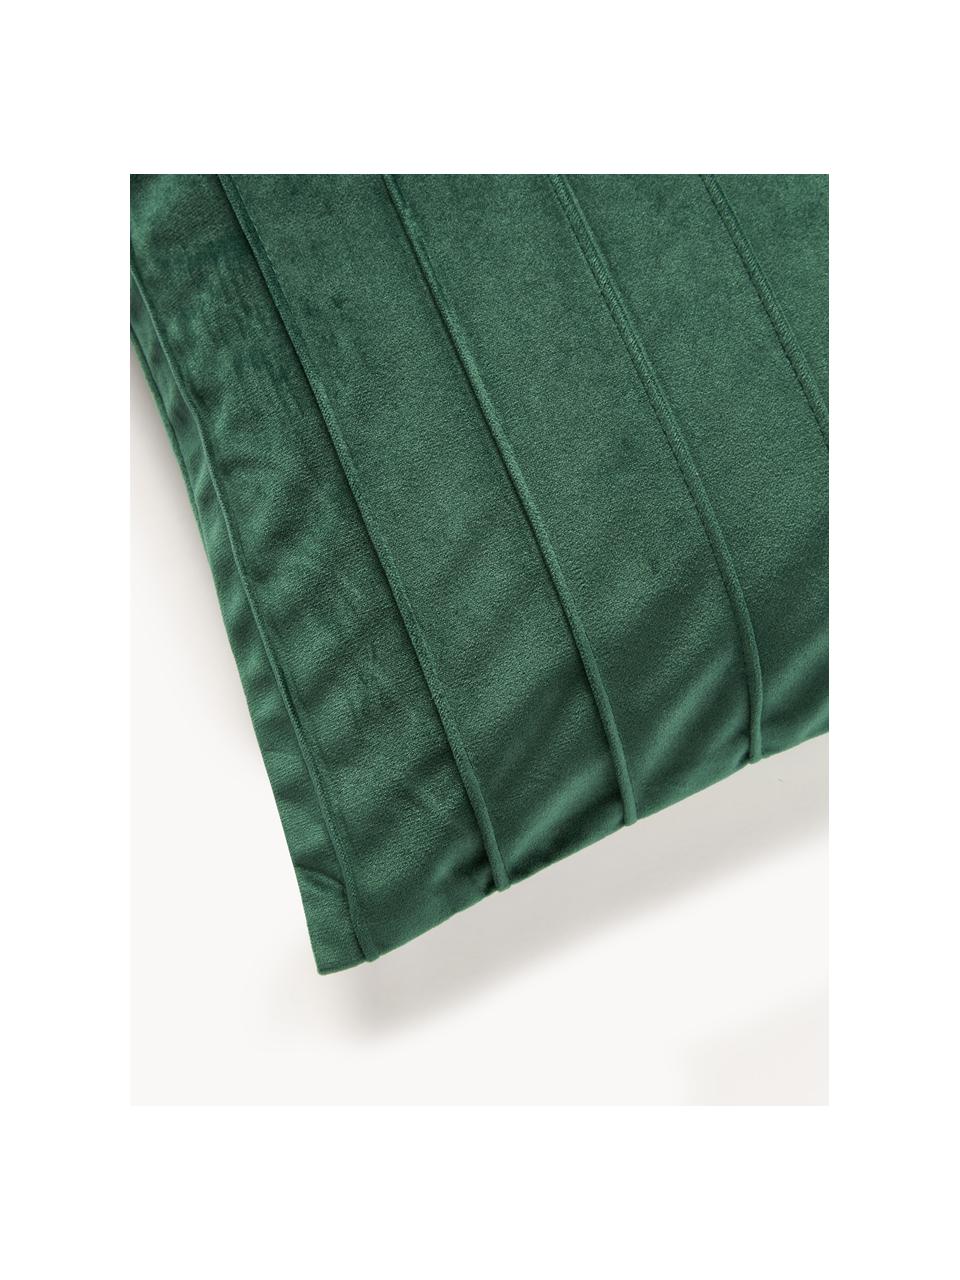 Fluwelen kussenhoes Lola met structuurpatroon, Fluweel (100% polyester), Donkergroen, B 40 x L 40 cm